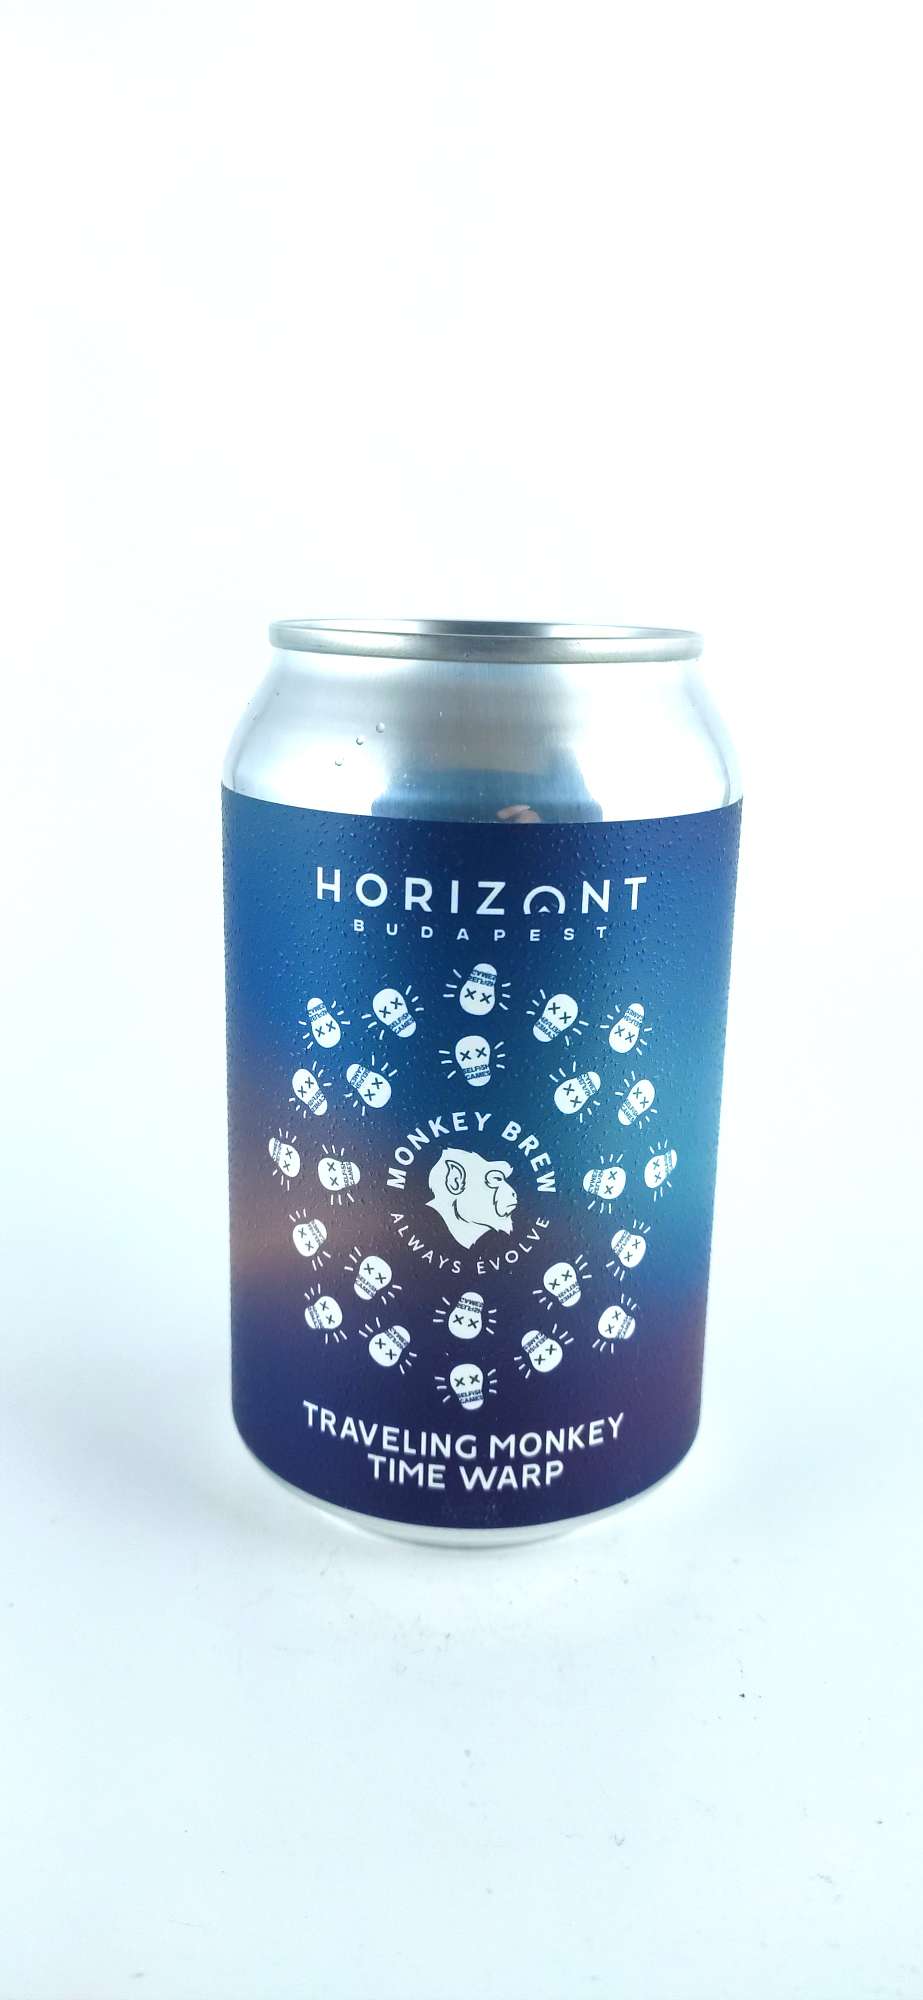 Horizont Traveling Monkey Time Warp NEIPA